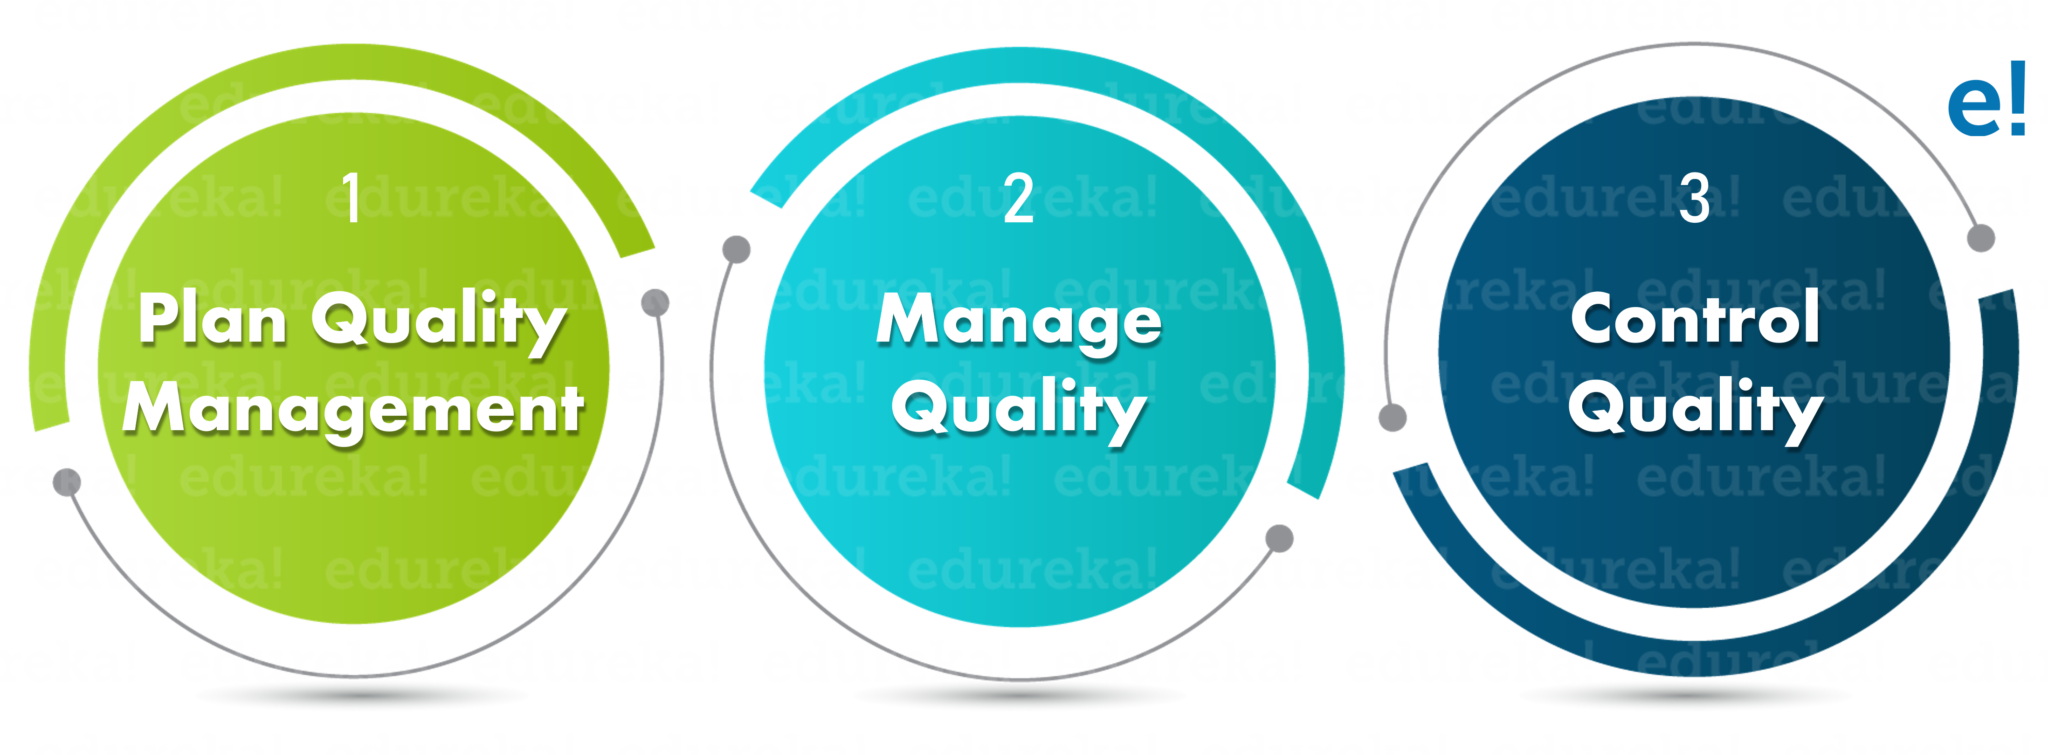 Processes - Project Quality Management - Edureka